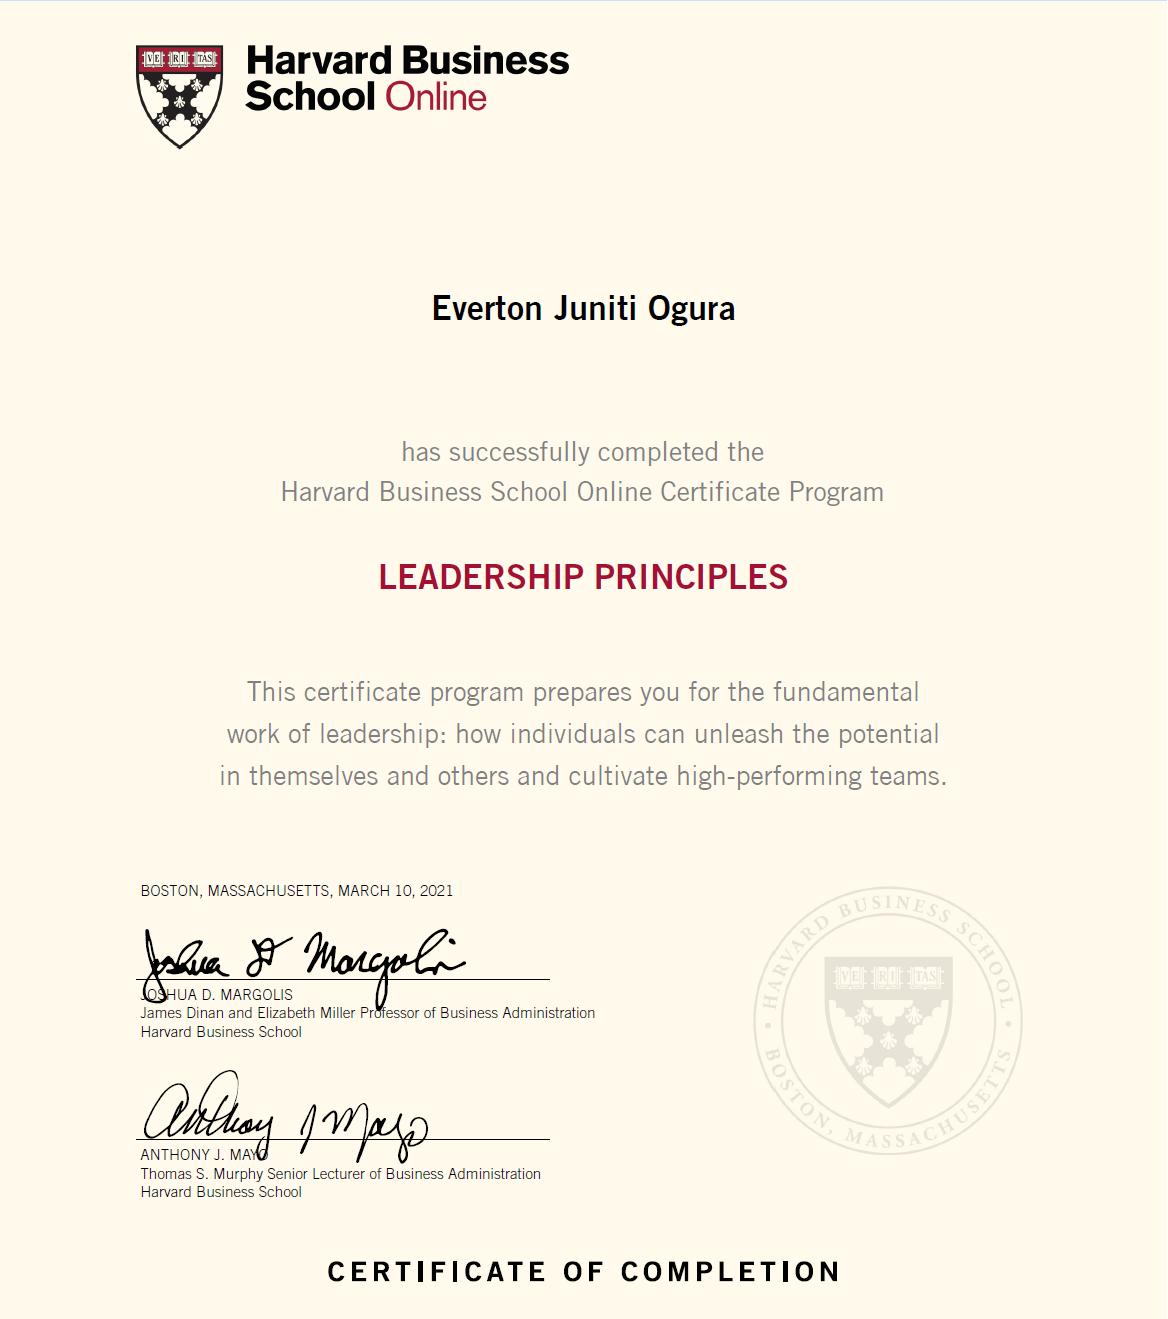 Harvard Business School Online Leadership Principles certificate image